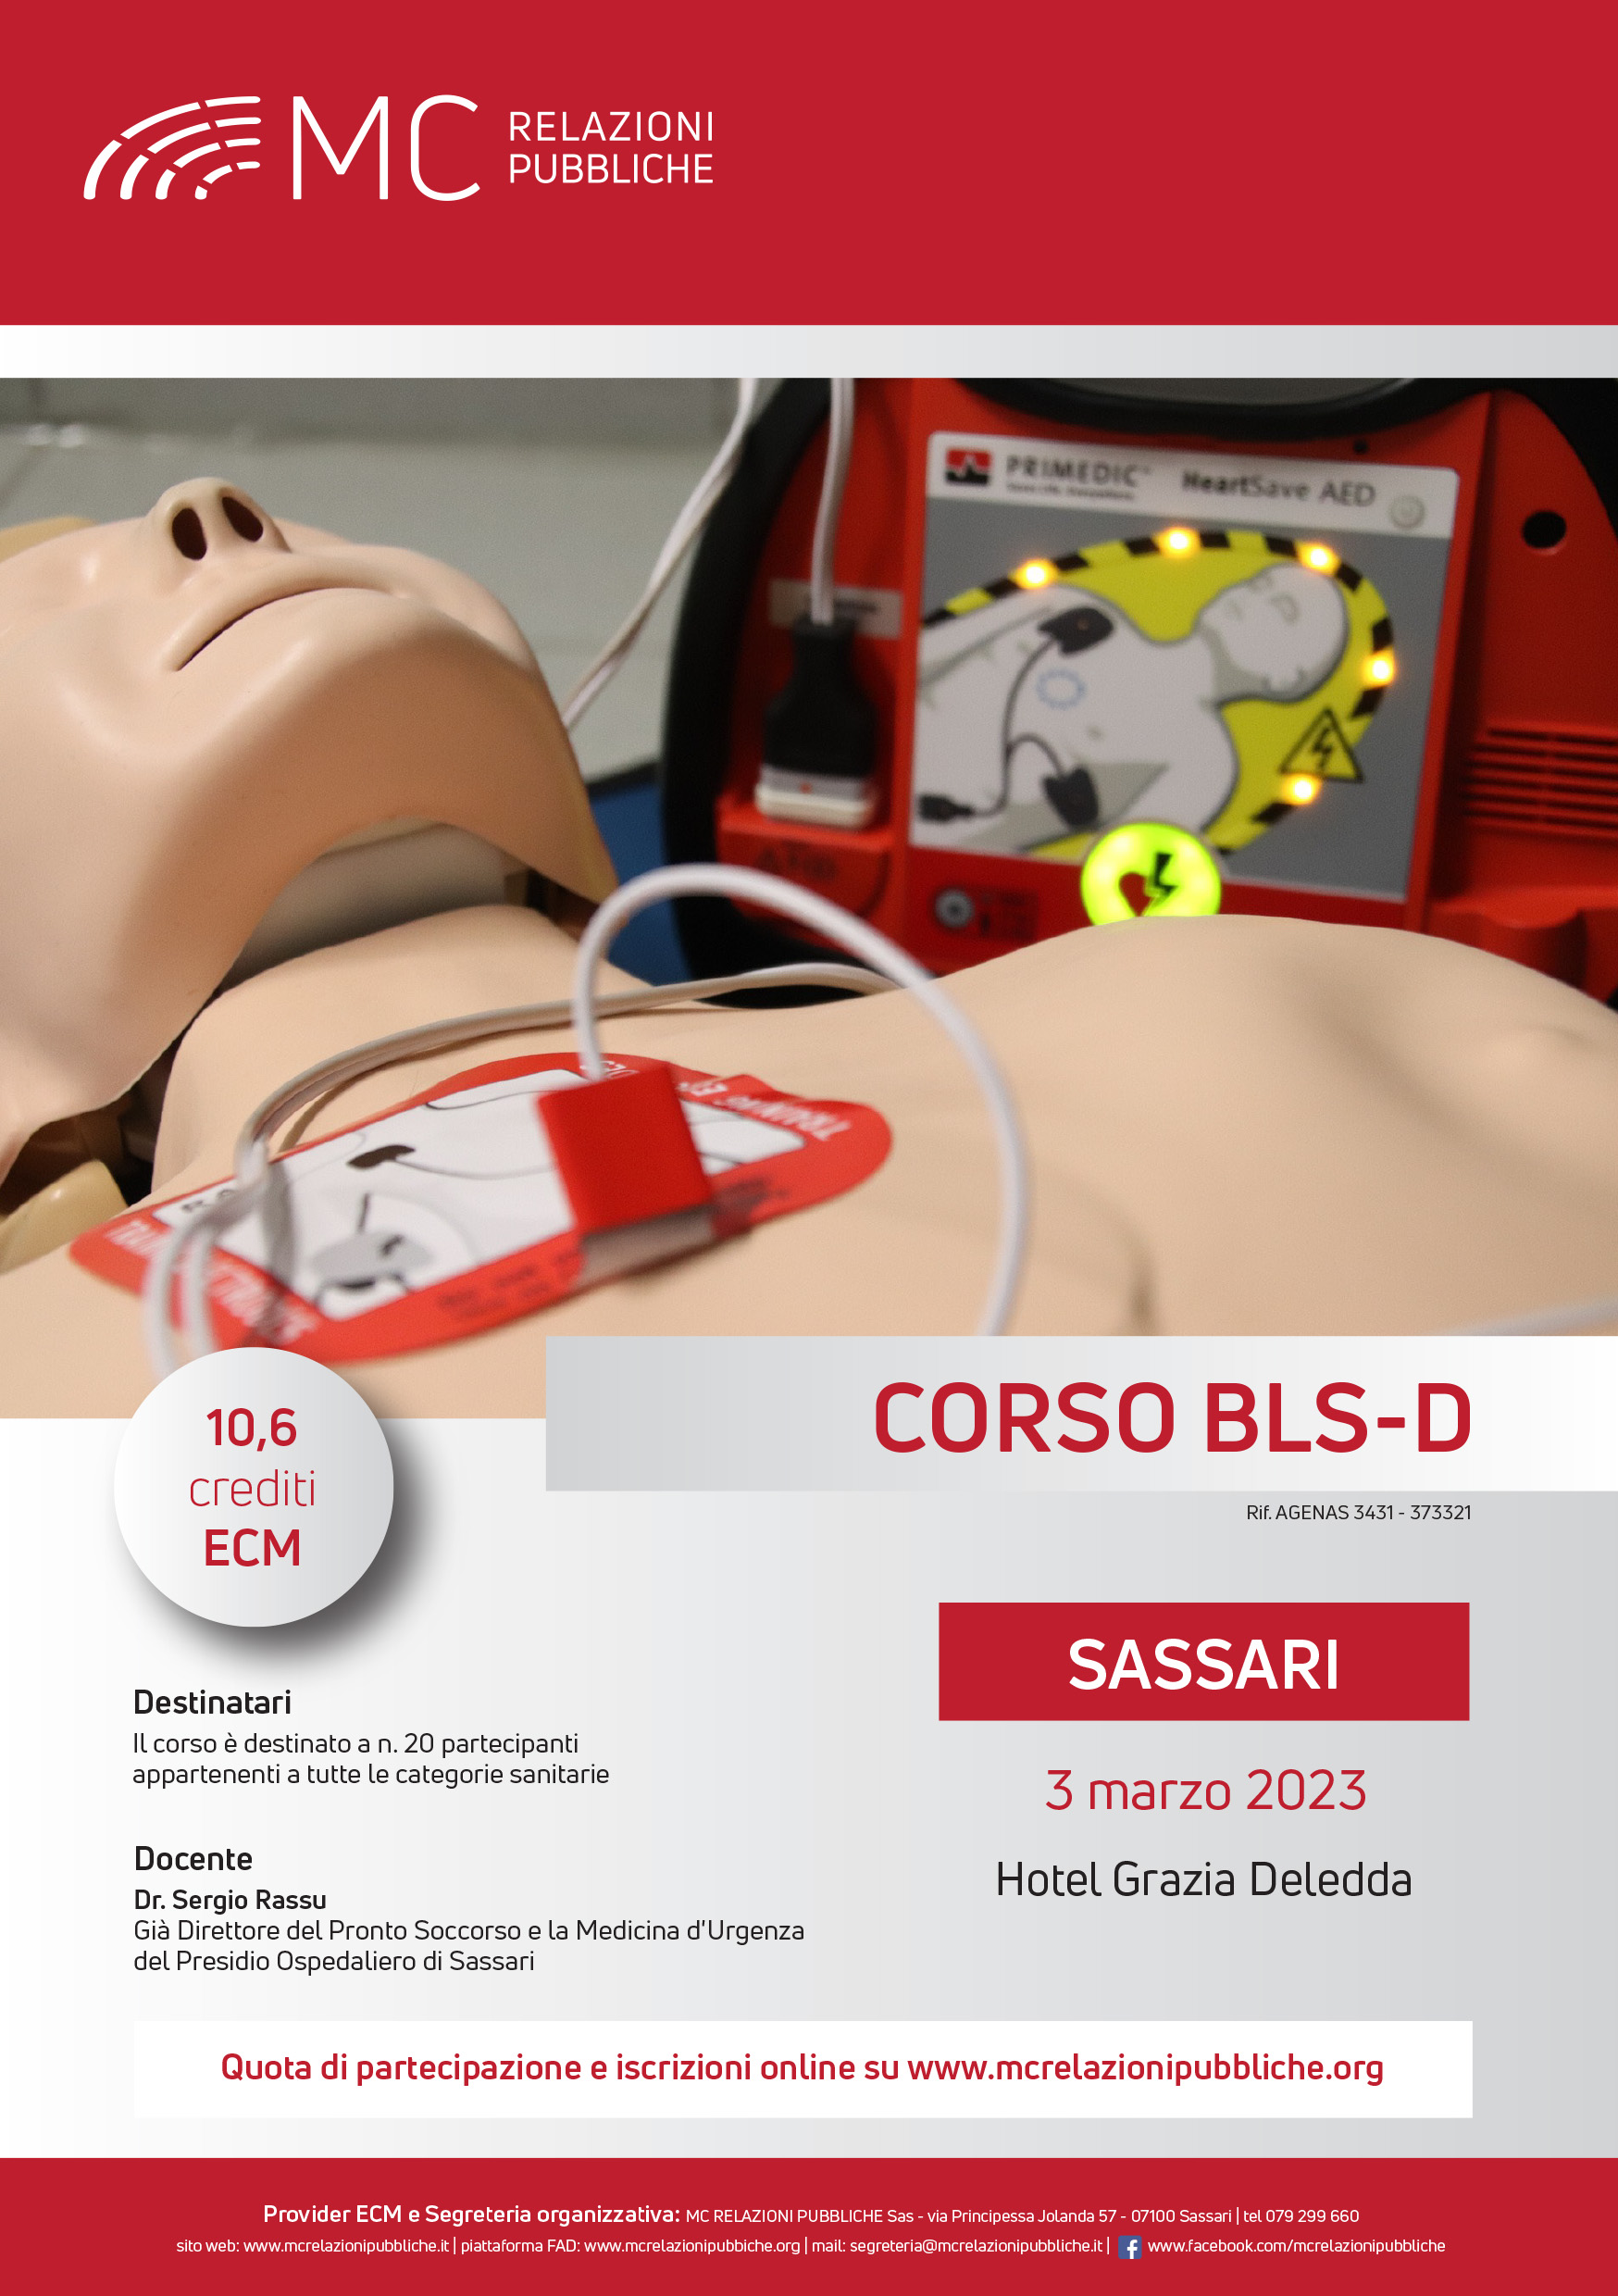 Corso BLS-D. Basic life support-defibrillation ed.2